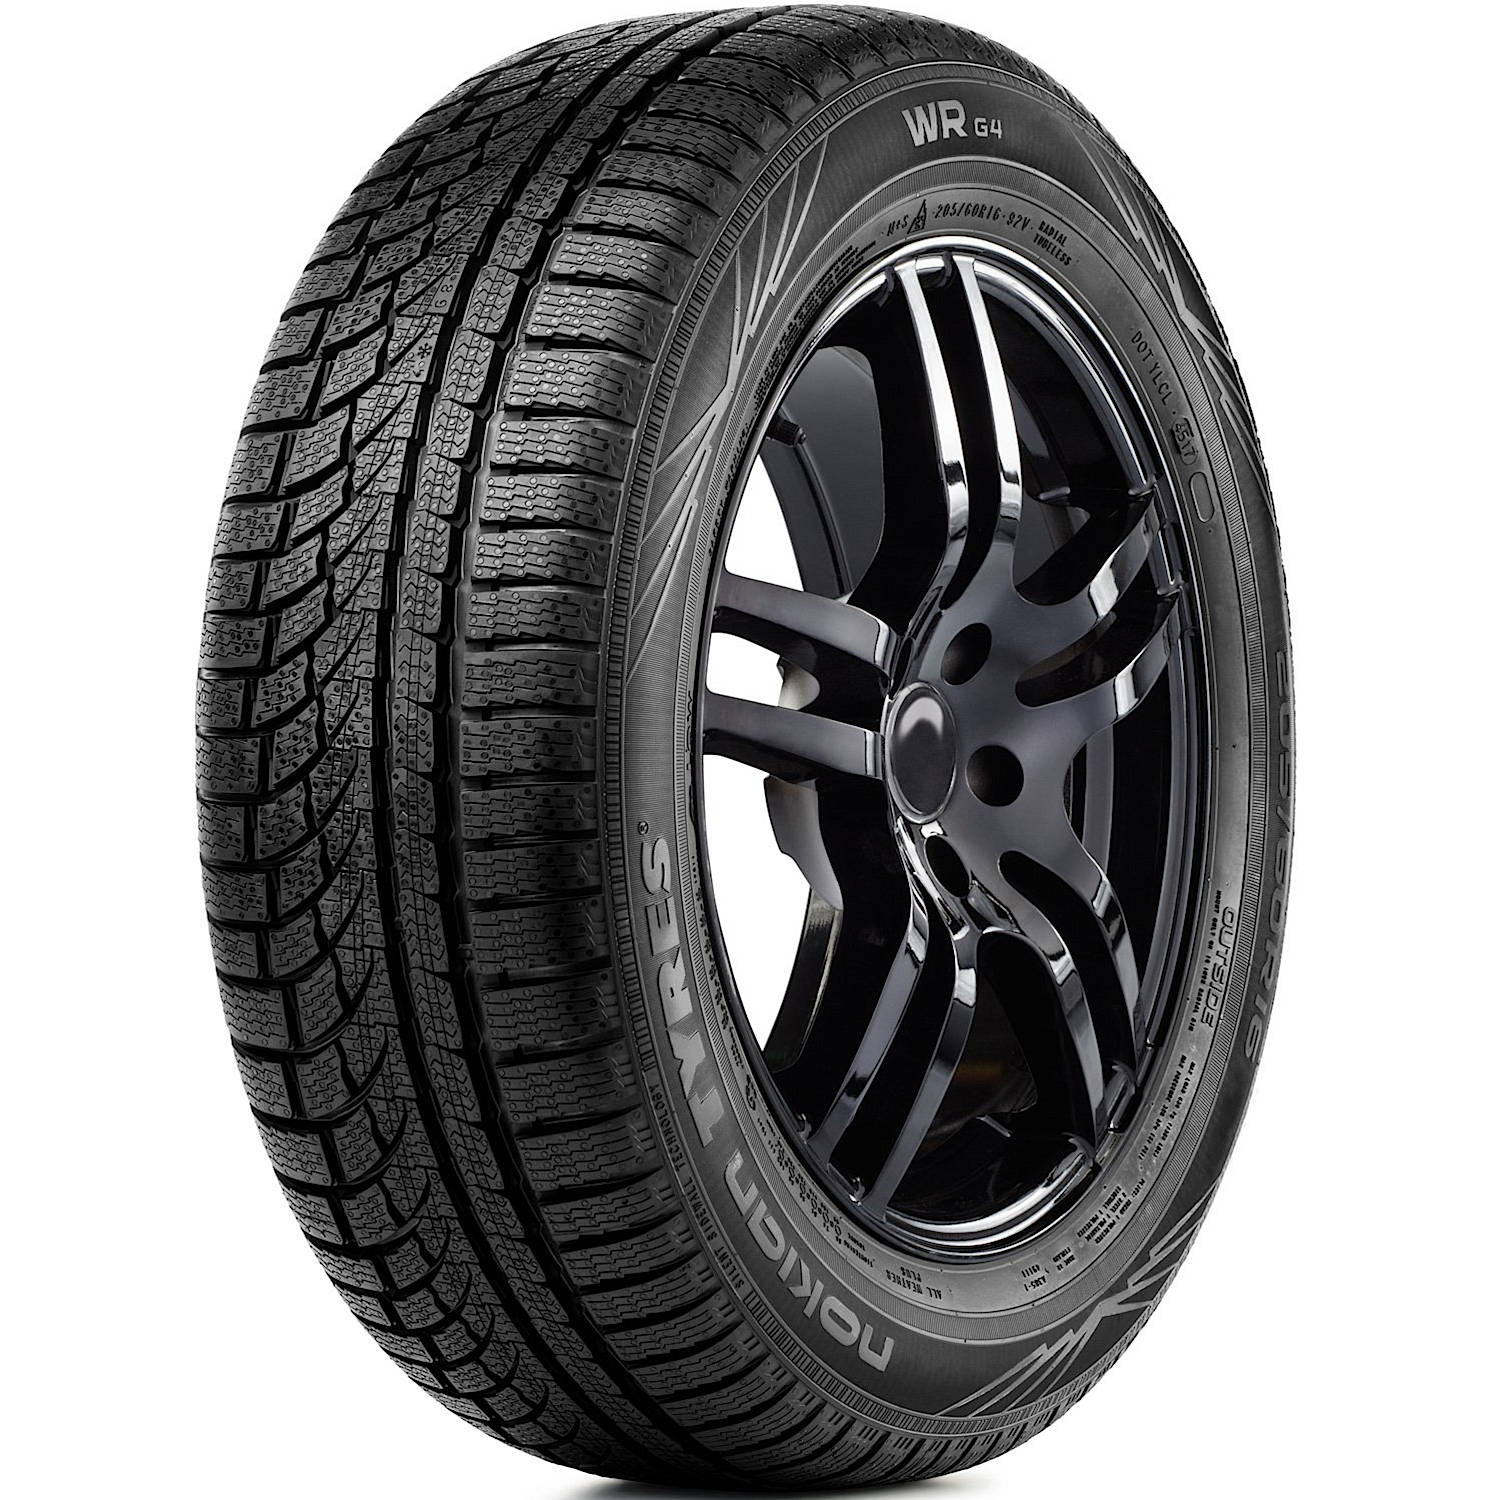 NOKIAN WR G4 235/55R17 (27.2X9.3R 17) Tires